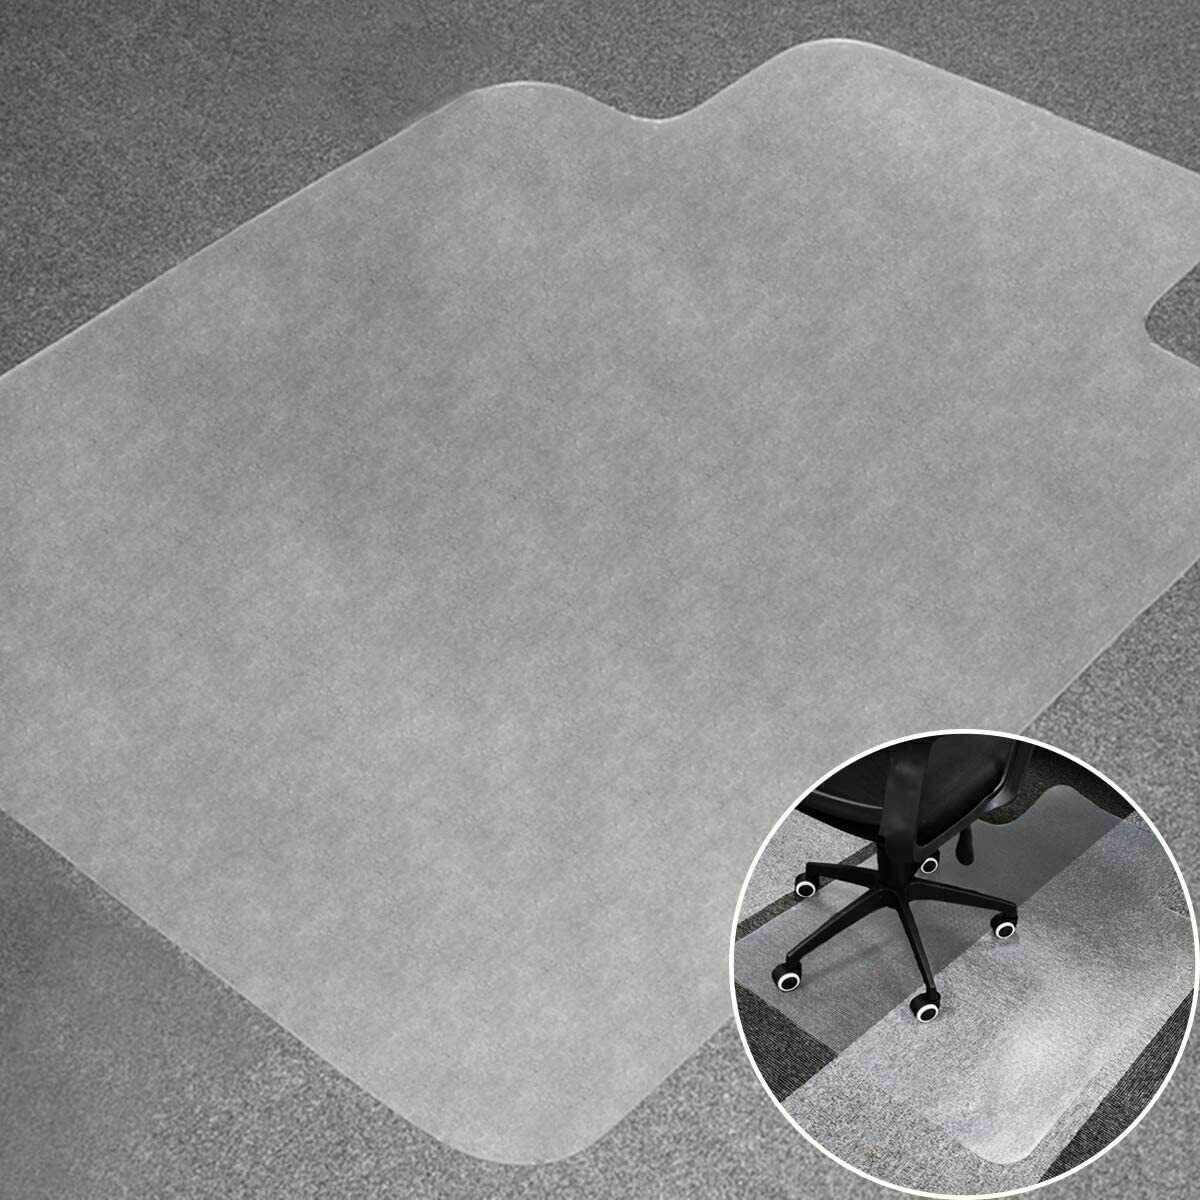 48"x36" Pvc Home Office Carpet Hard Protector Desk Floor Mat Chair Transparent